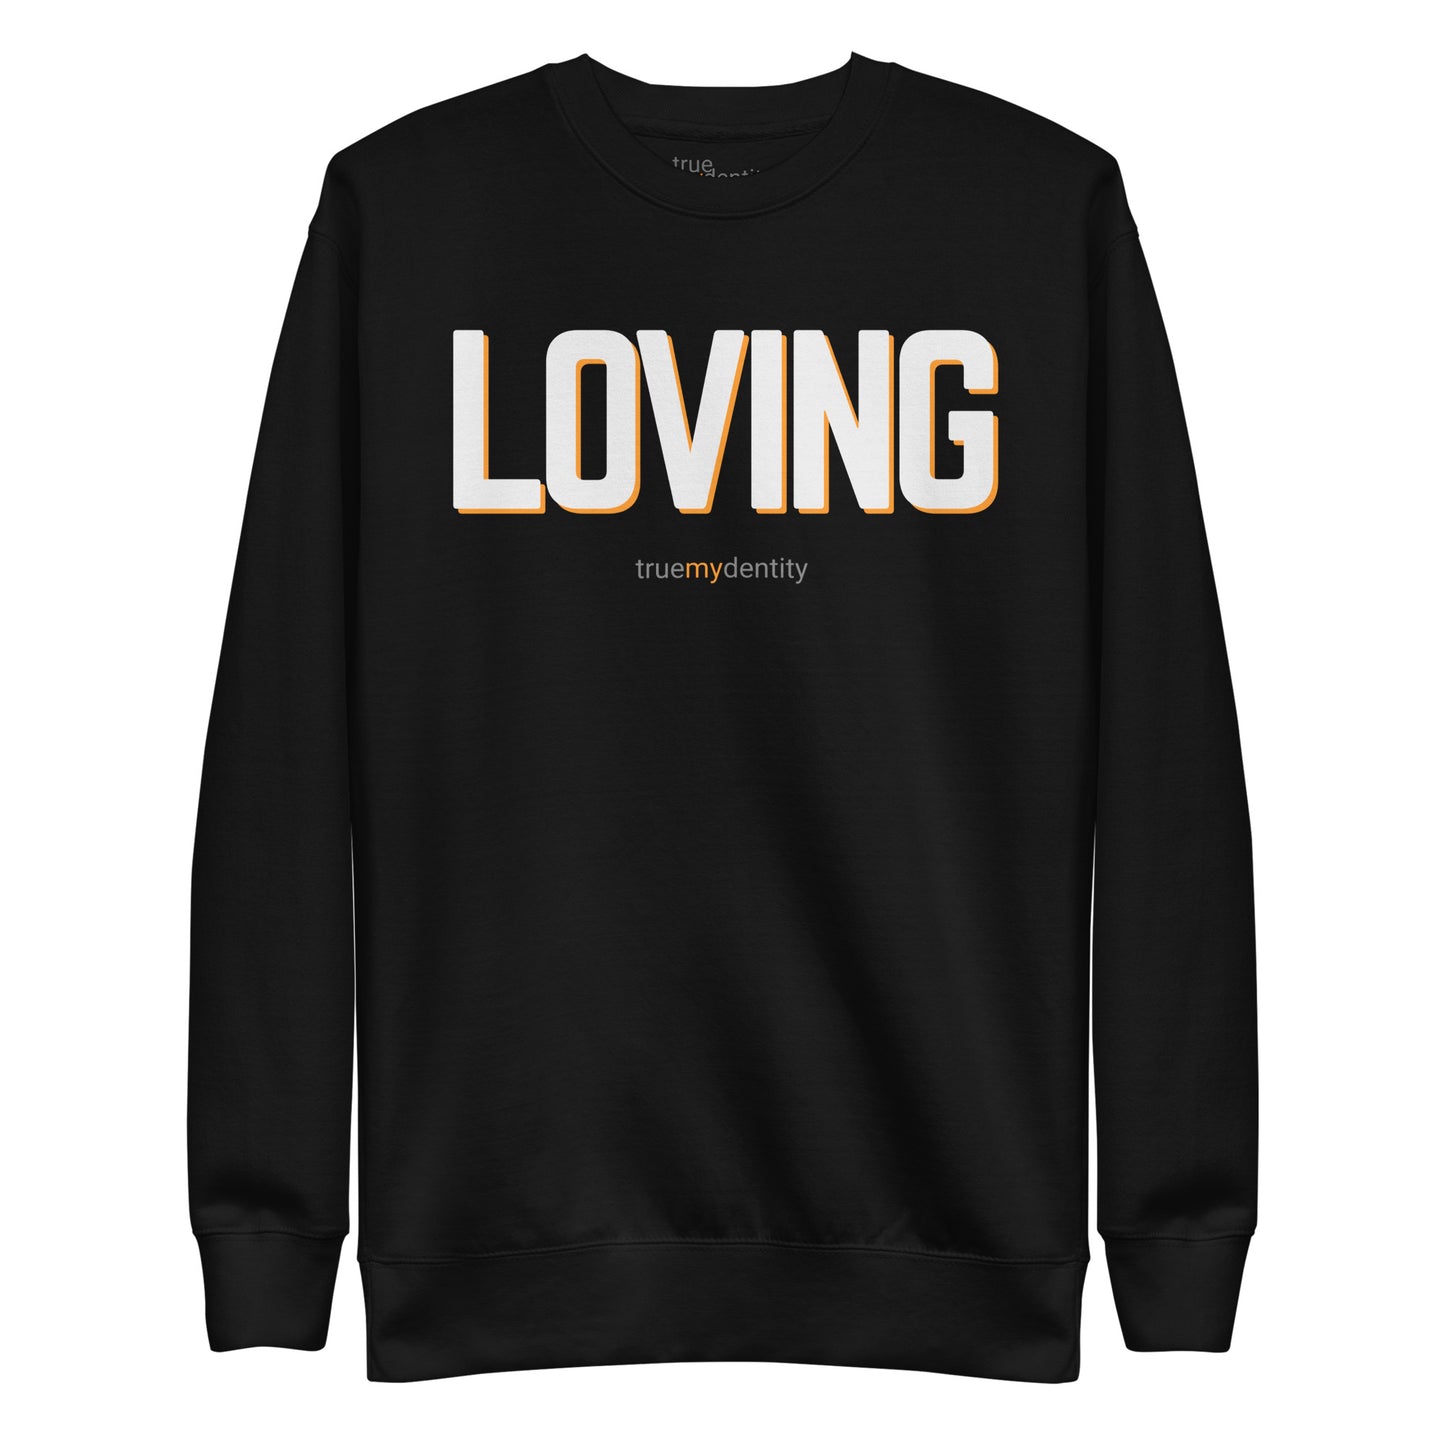 LOVING Sweatshirt Bold Design | Unisex